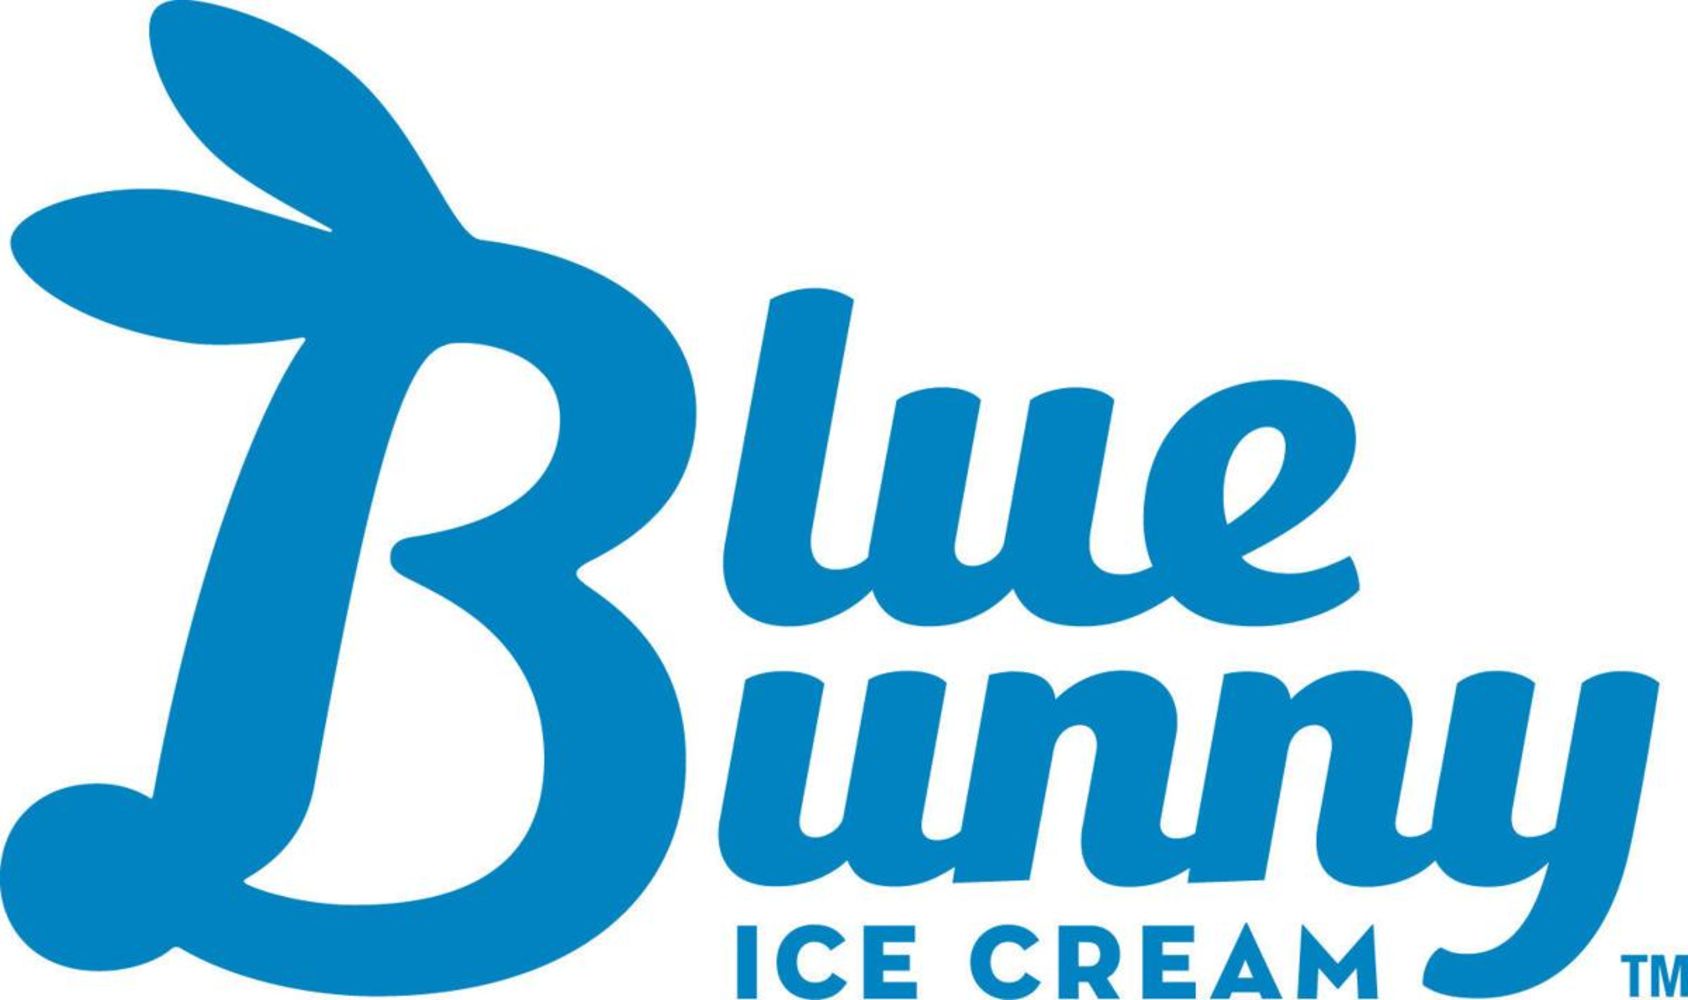 Wells-Blue Bunny Ice Cream Equipment